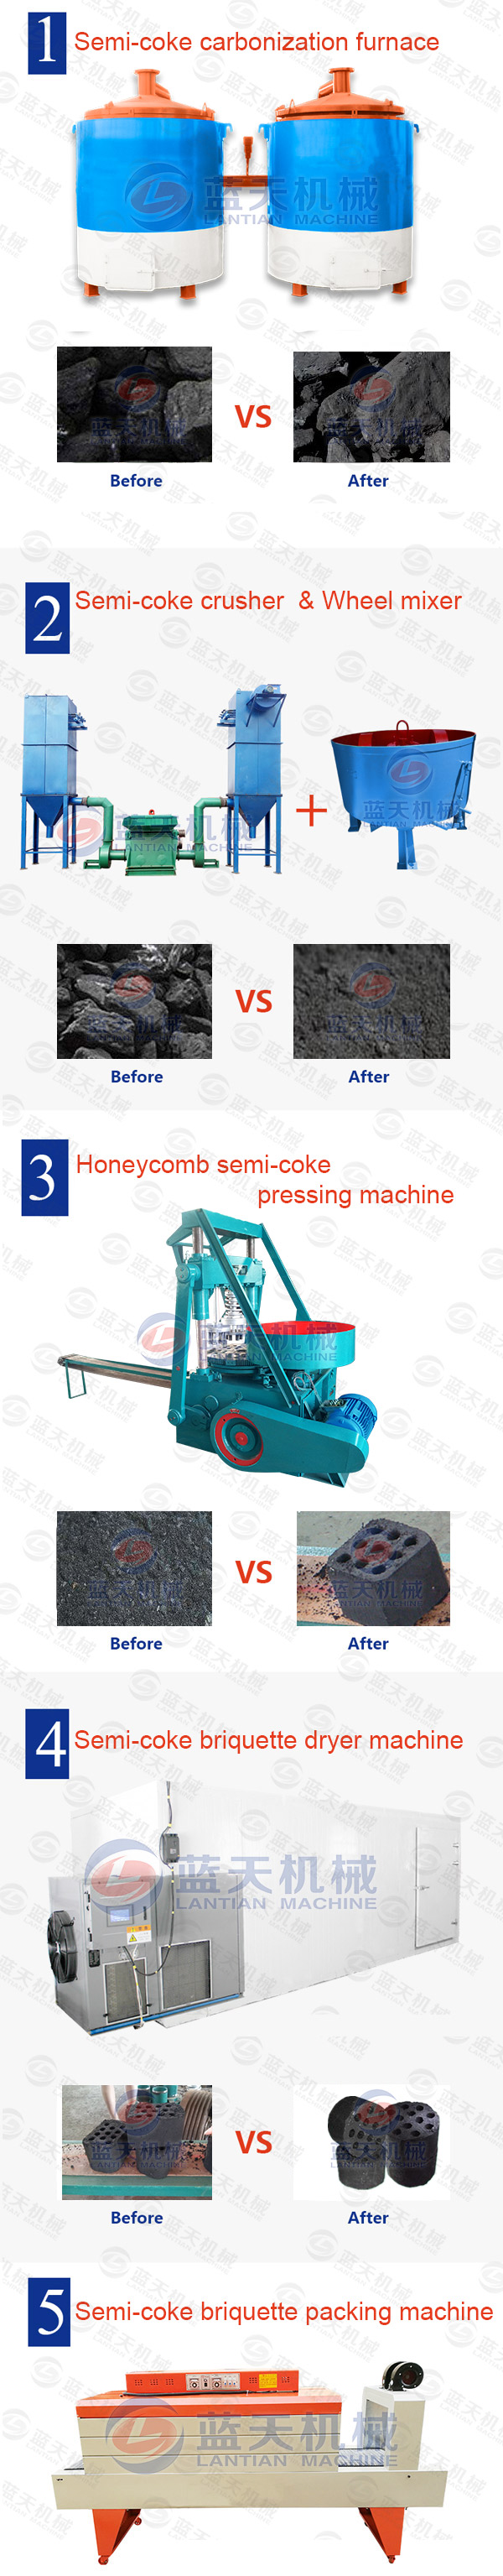 Honeycomb Semi-coke Pressing Machine Production Line